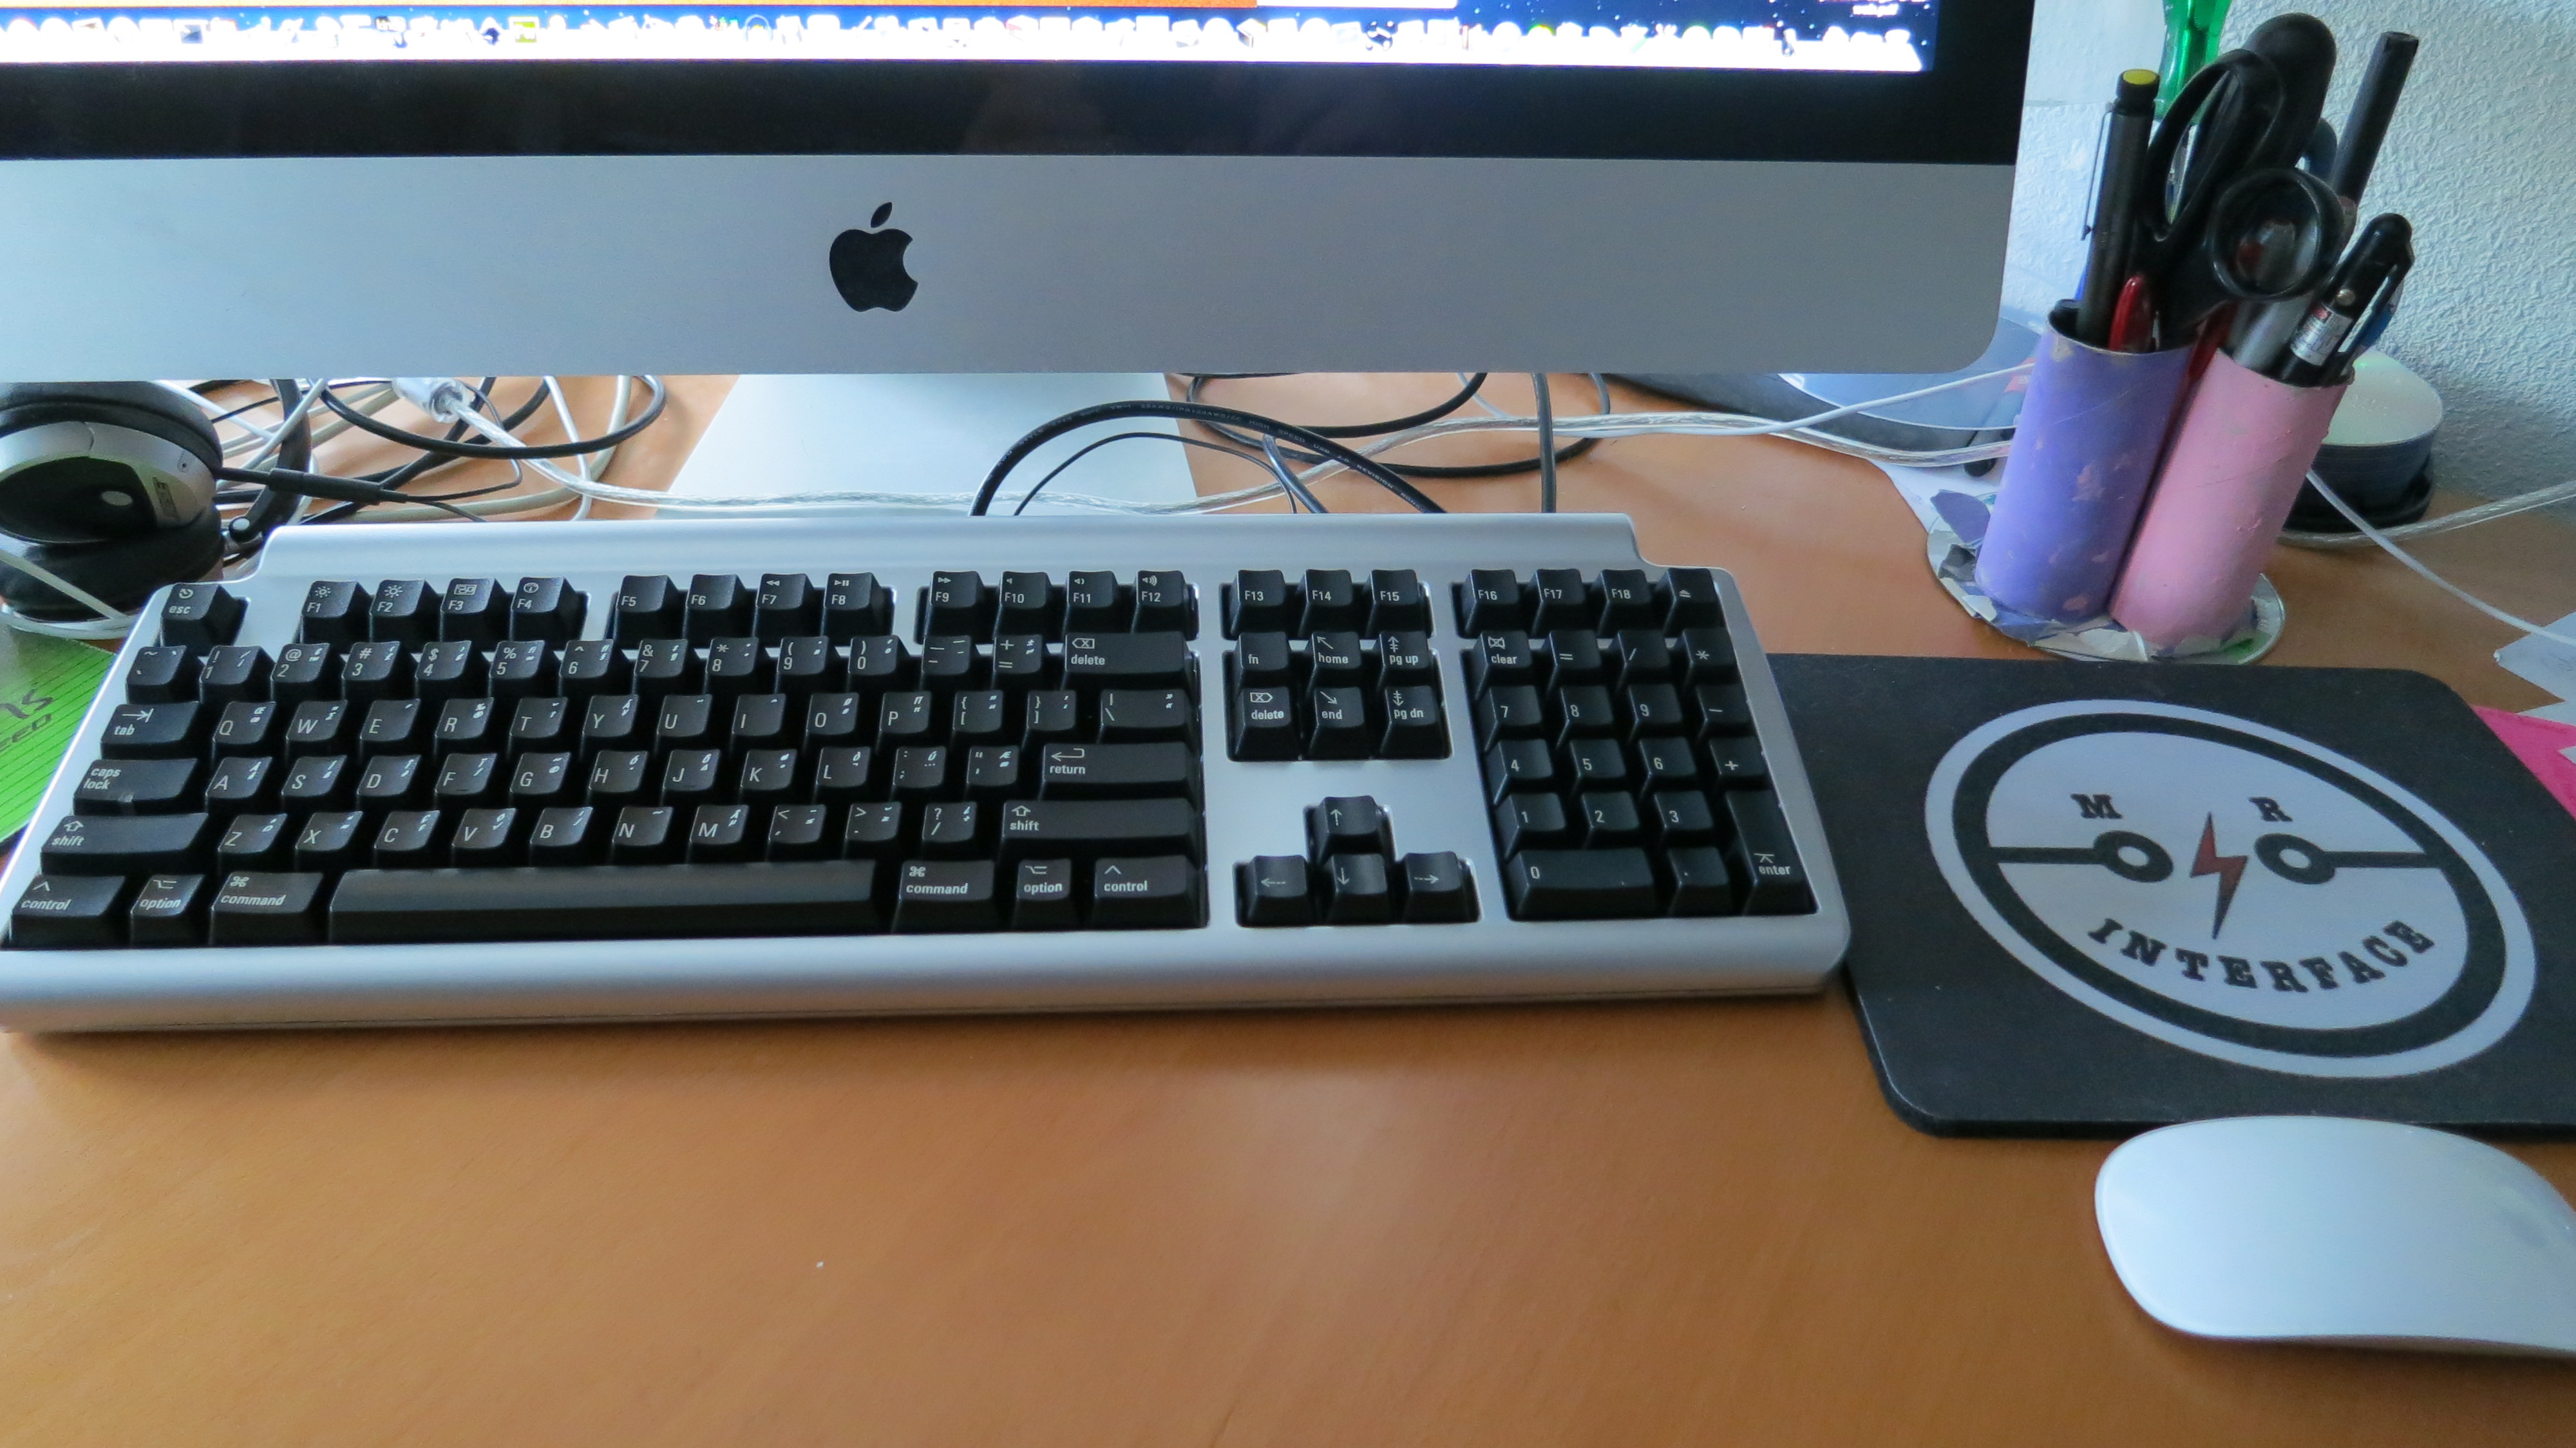 The Matias Quiet Pro keyboard